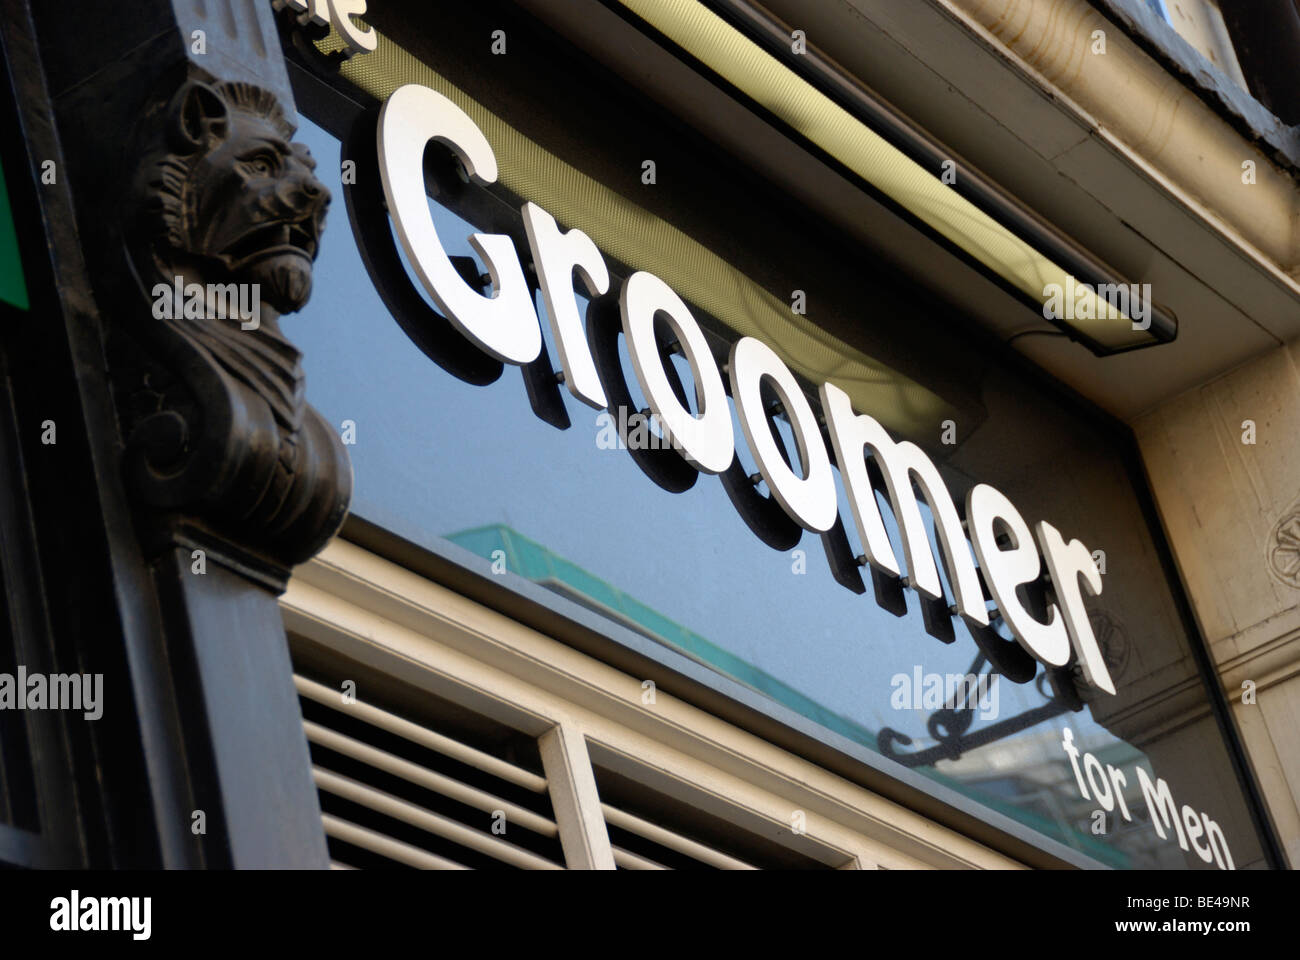 'Groomer for Men' sign outside barbers shop Stock Photo